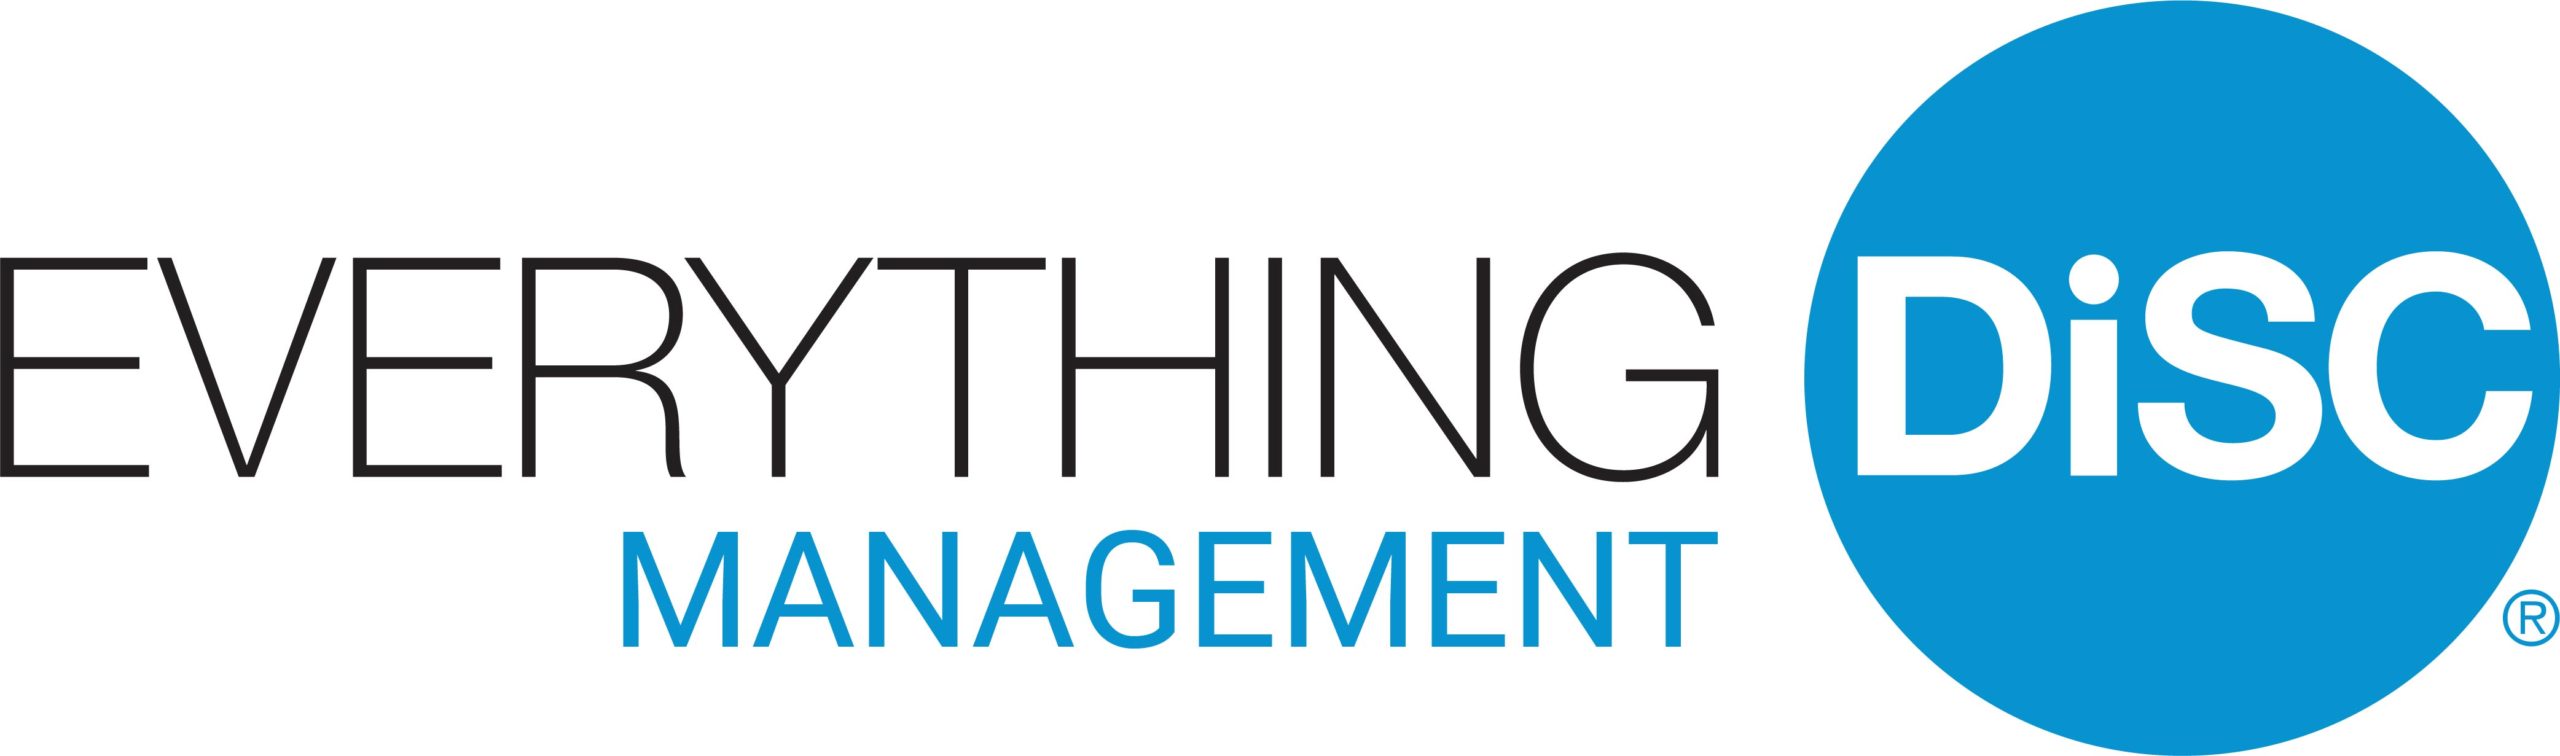 Everything_Disc_Management-RBG